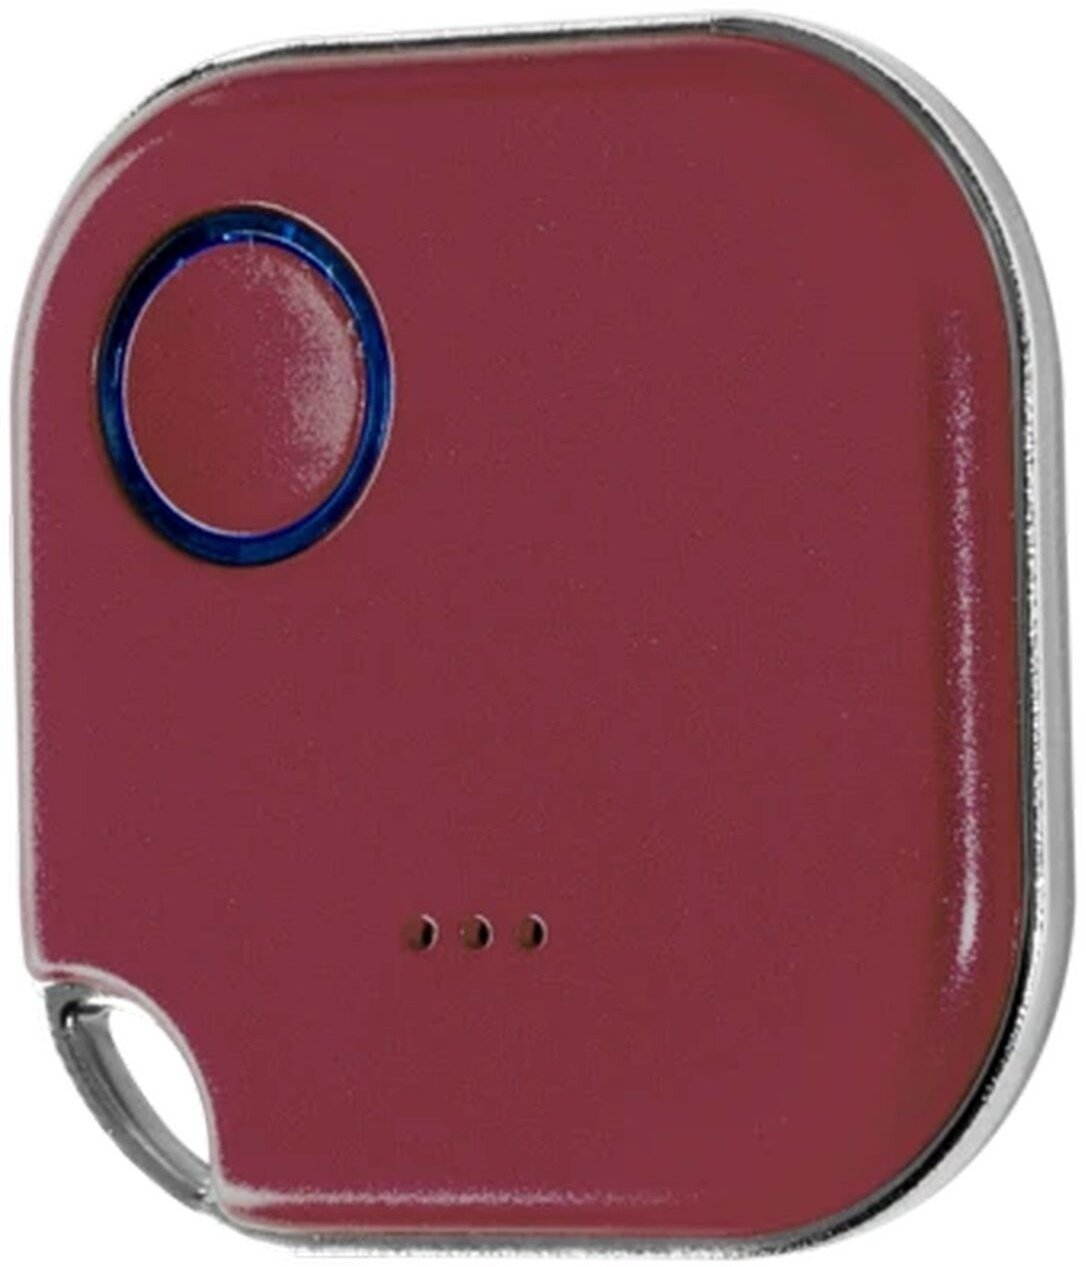 Shelly Bluetooth Button 1, bateriové tlačítko, červené - SHELLY-BLU-BUTTON1-R